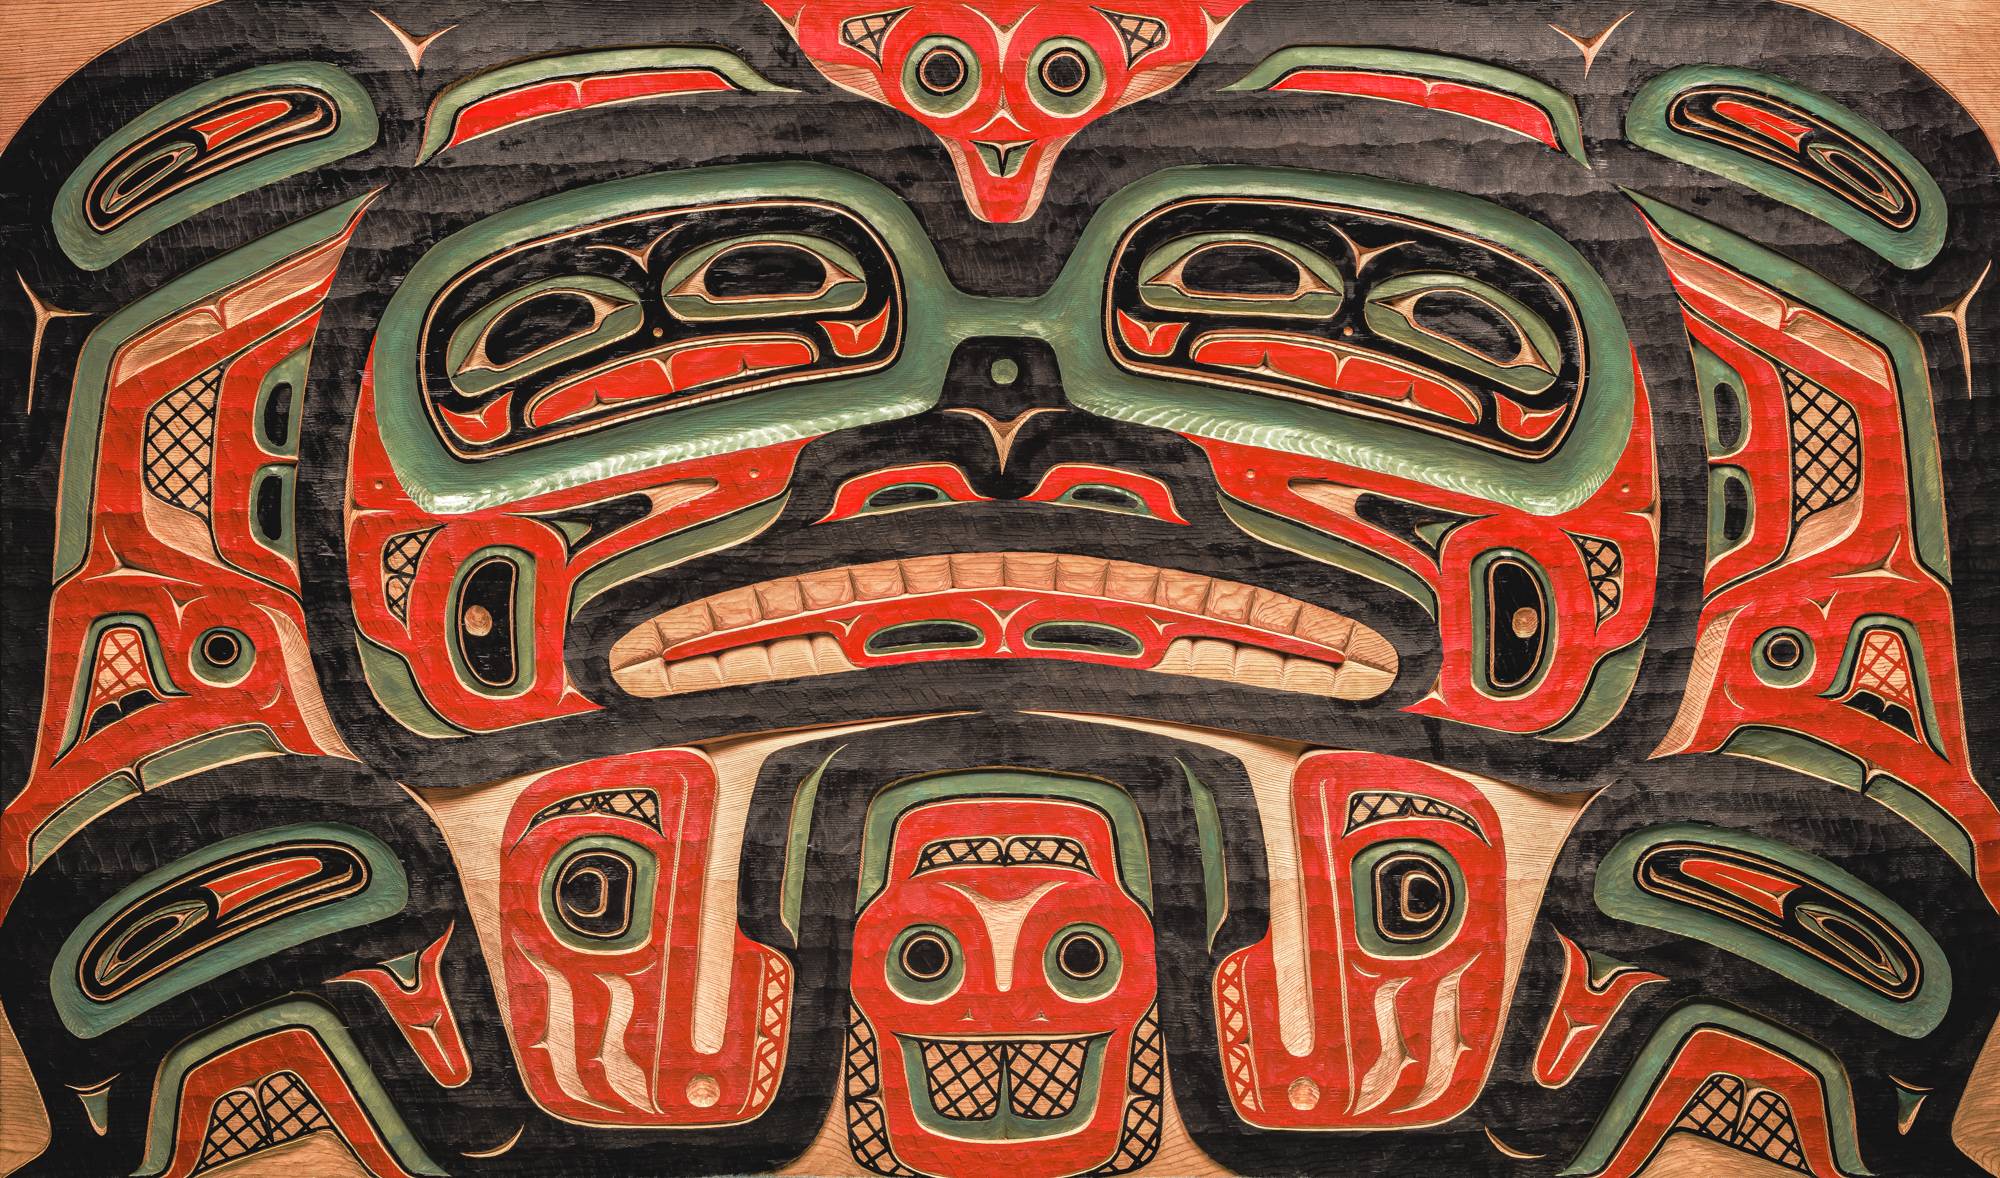 Cape Fox Lodge Tlingit Art Panel designed by Kenneth "Kelly" White.